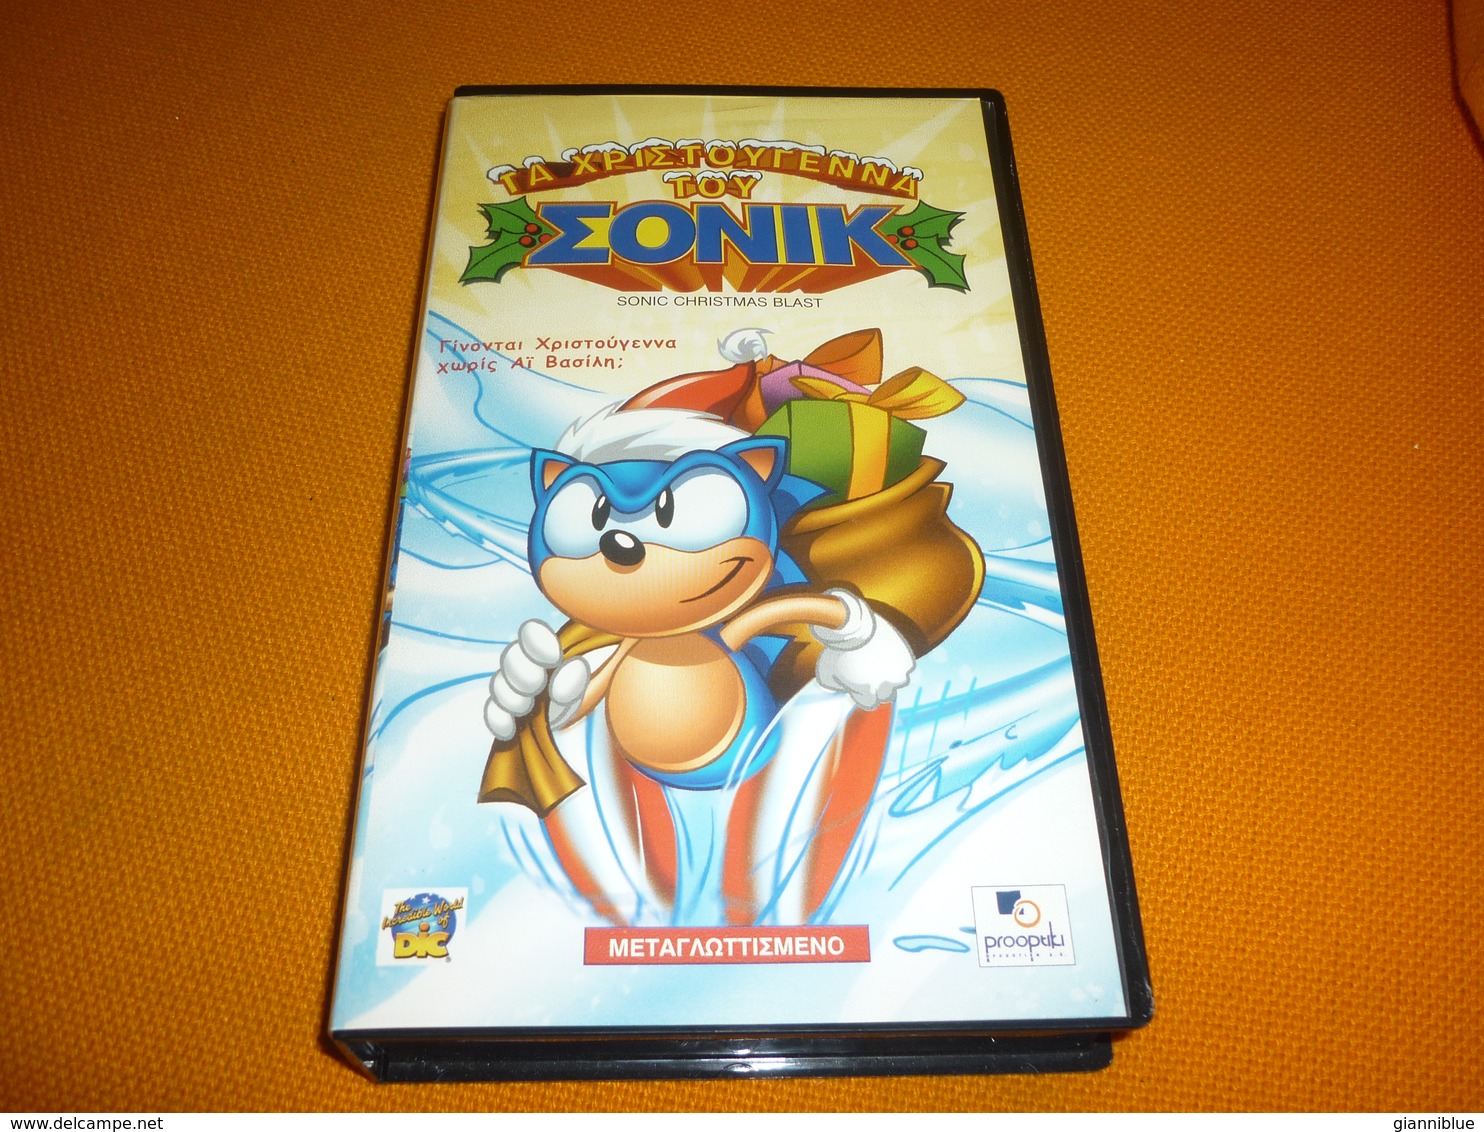 Sonic The Hedgehog Old Greek Vhs Cassette Video Tape From Greece - Dessins Animés